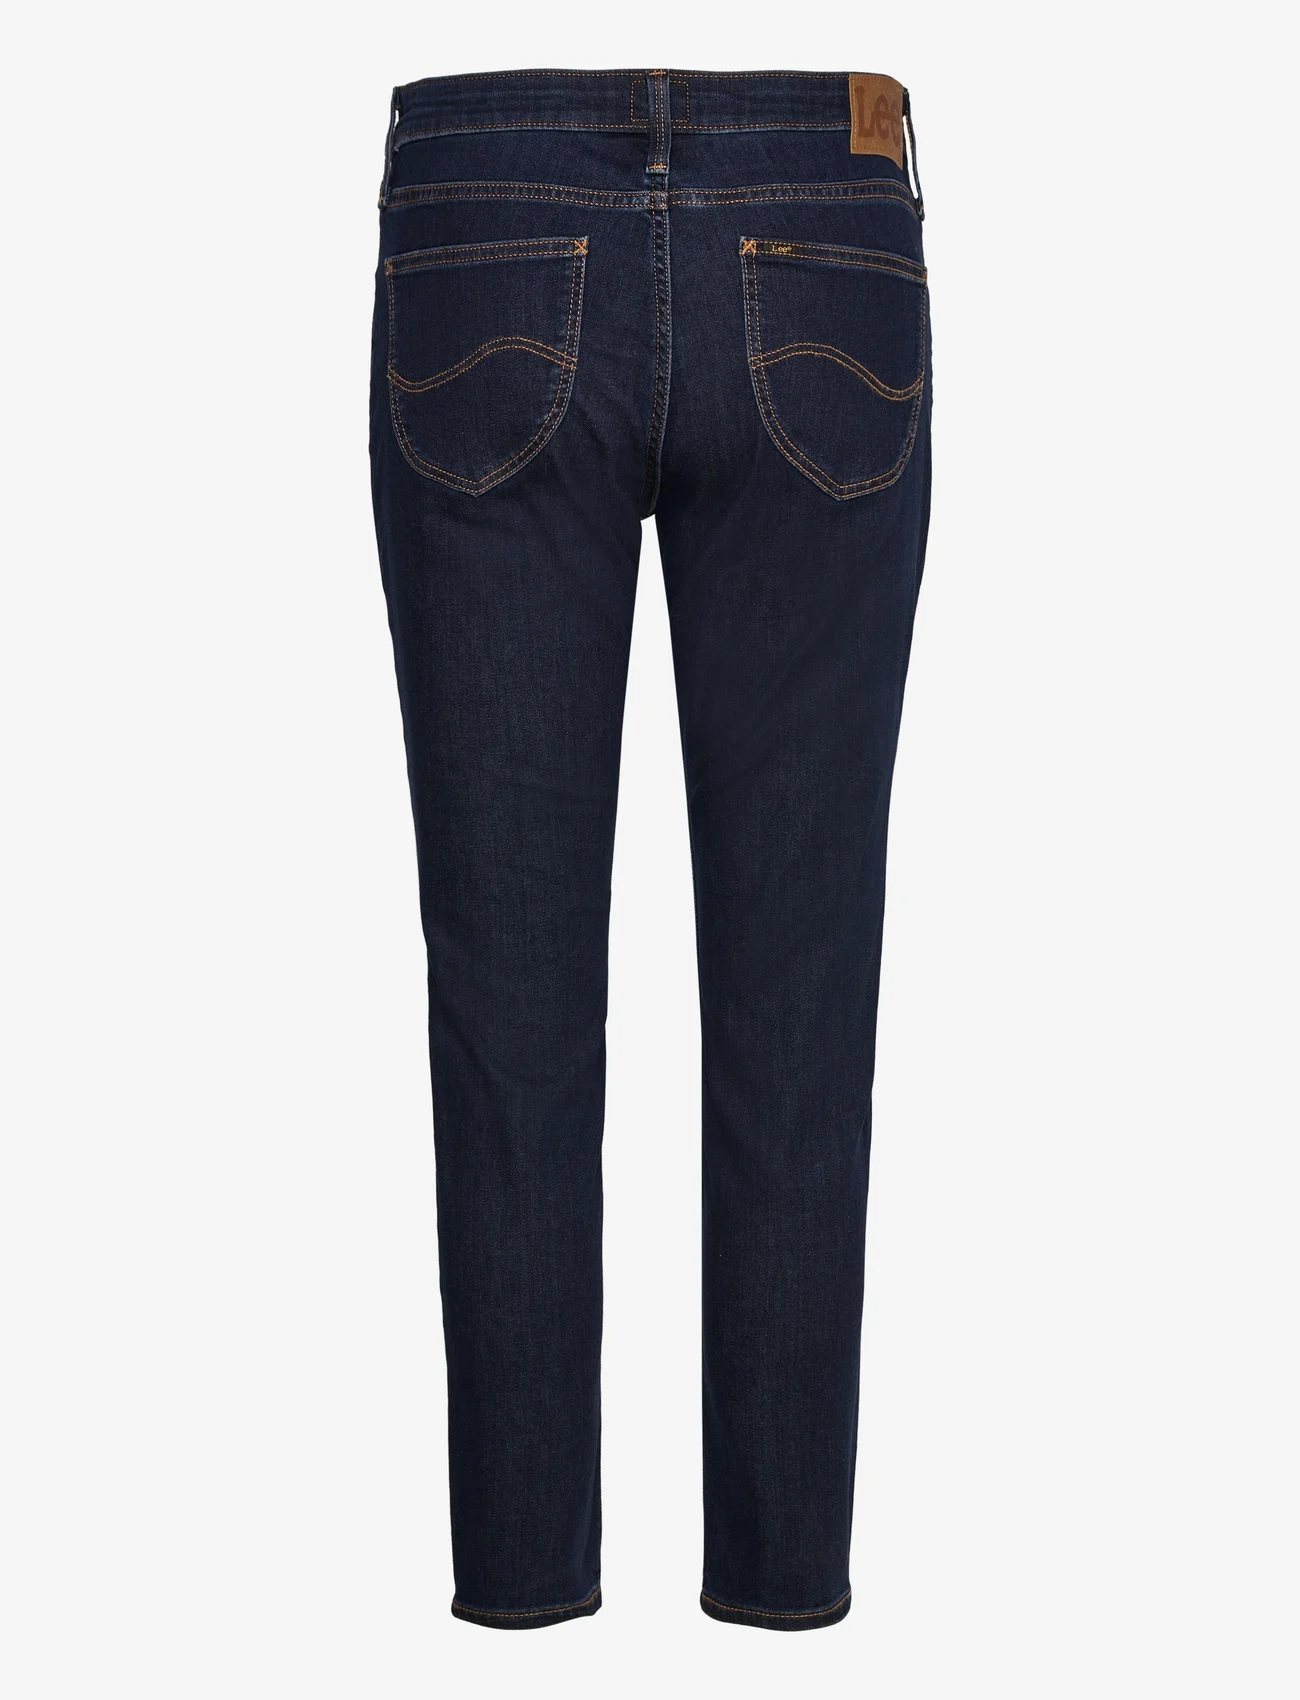 Lee Jeans - SCARLETT - dżinsy skinny fit - solid blue - 1